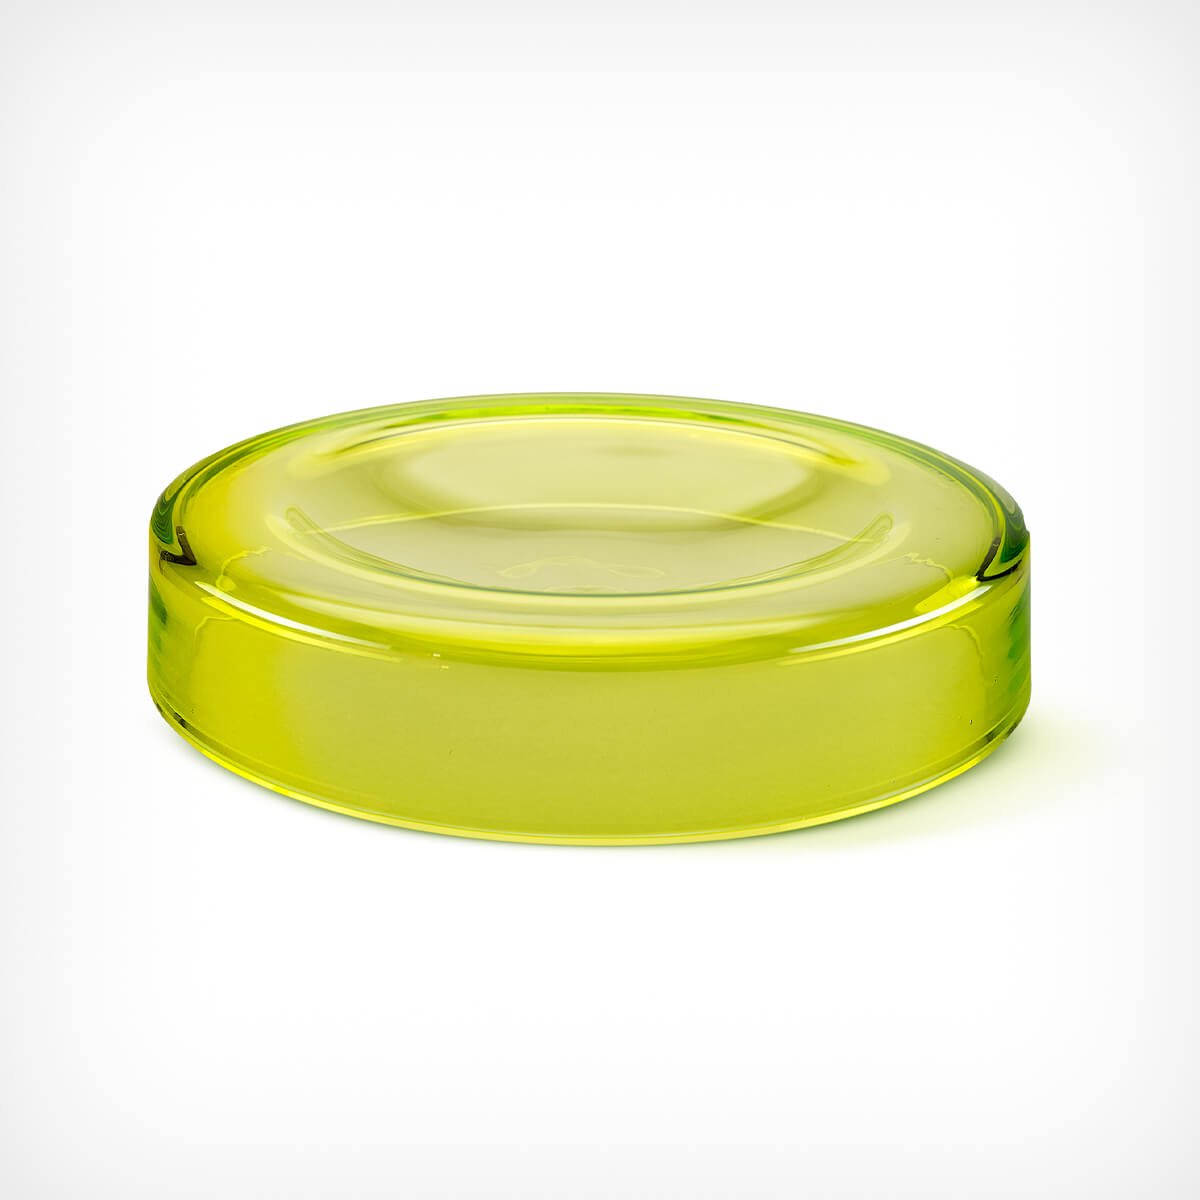 Schale „WET Bowl” Lime groß Ursula Futura – diesellerie.com